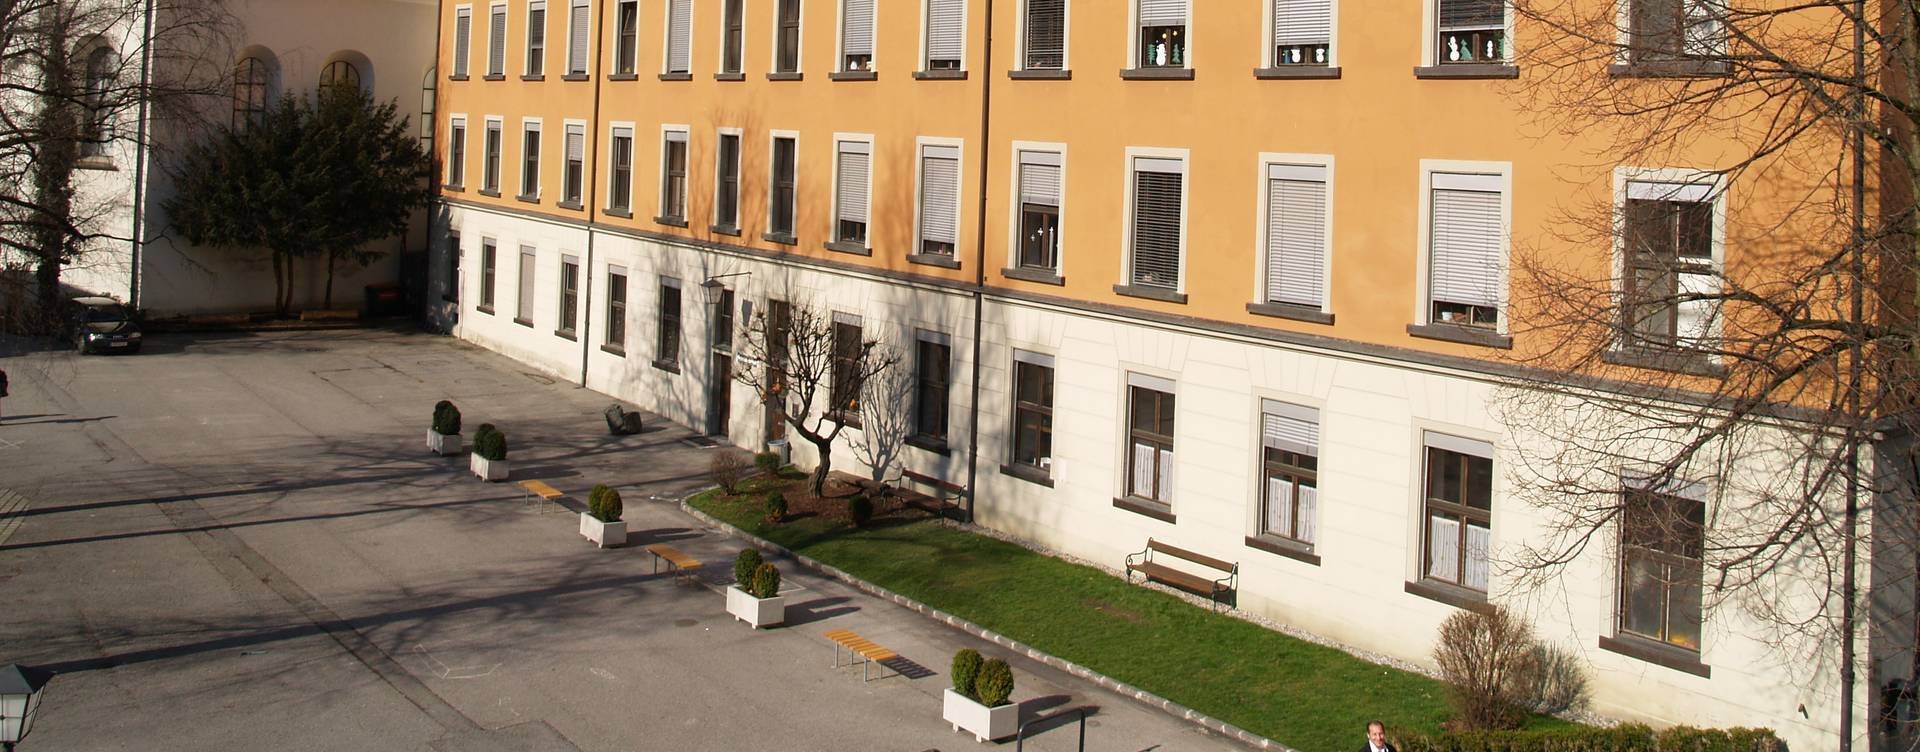 Pädagogisches Förderzentrum Feldkirch